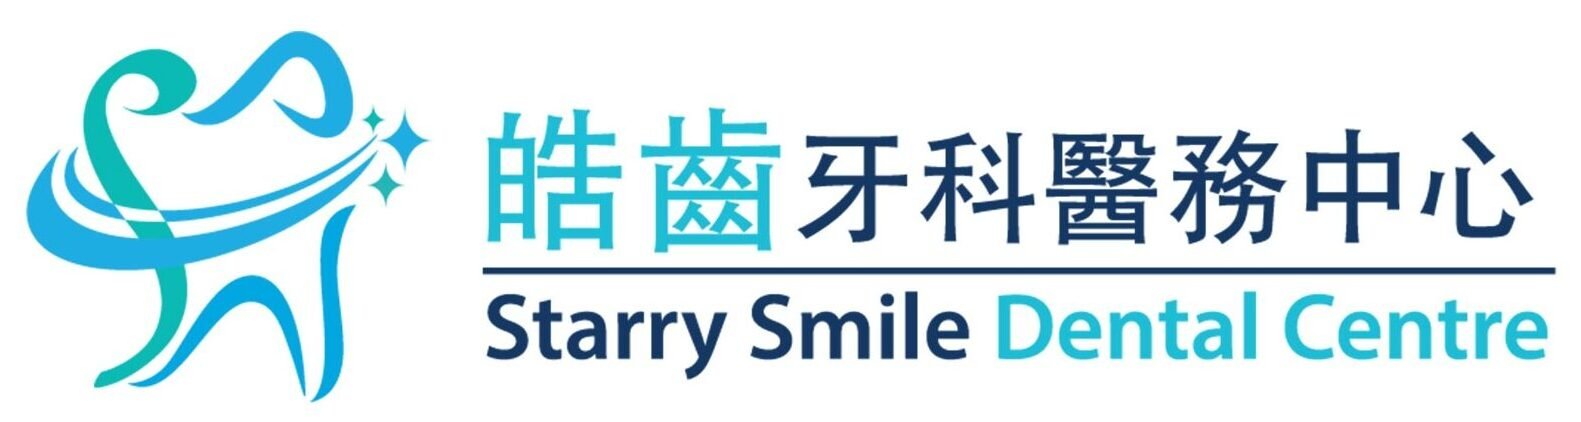 皓齒牙科醫務中心(荃灣) Starry Smile Dental Centre (Tsuen Wan)